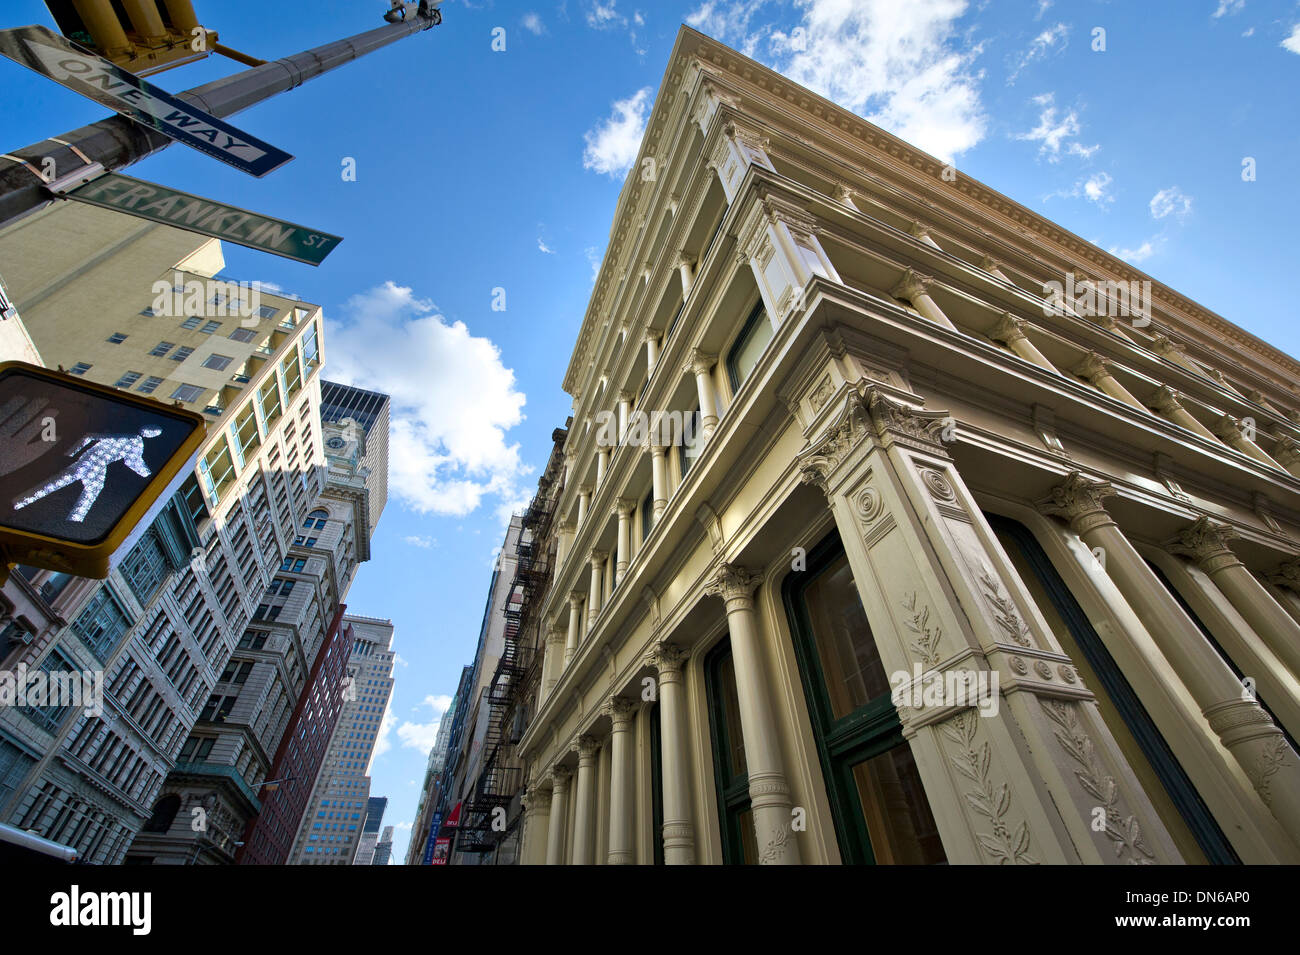 Cast iron facade of a historical building in Soho, New York City Stock Photo